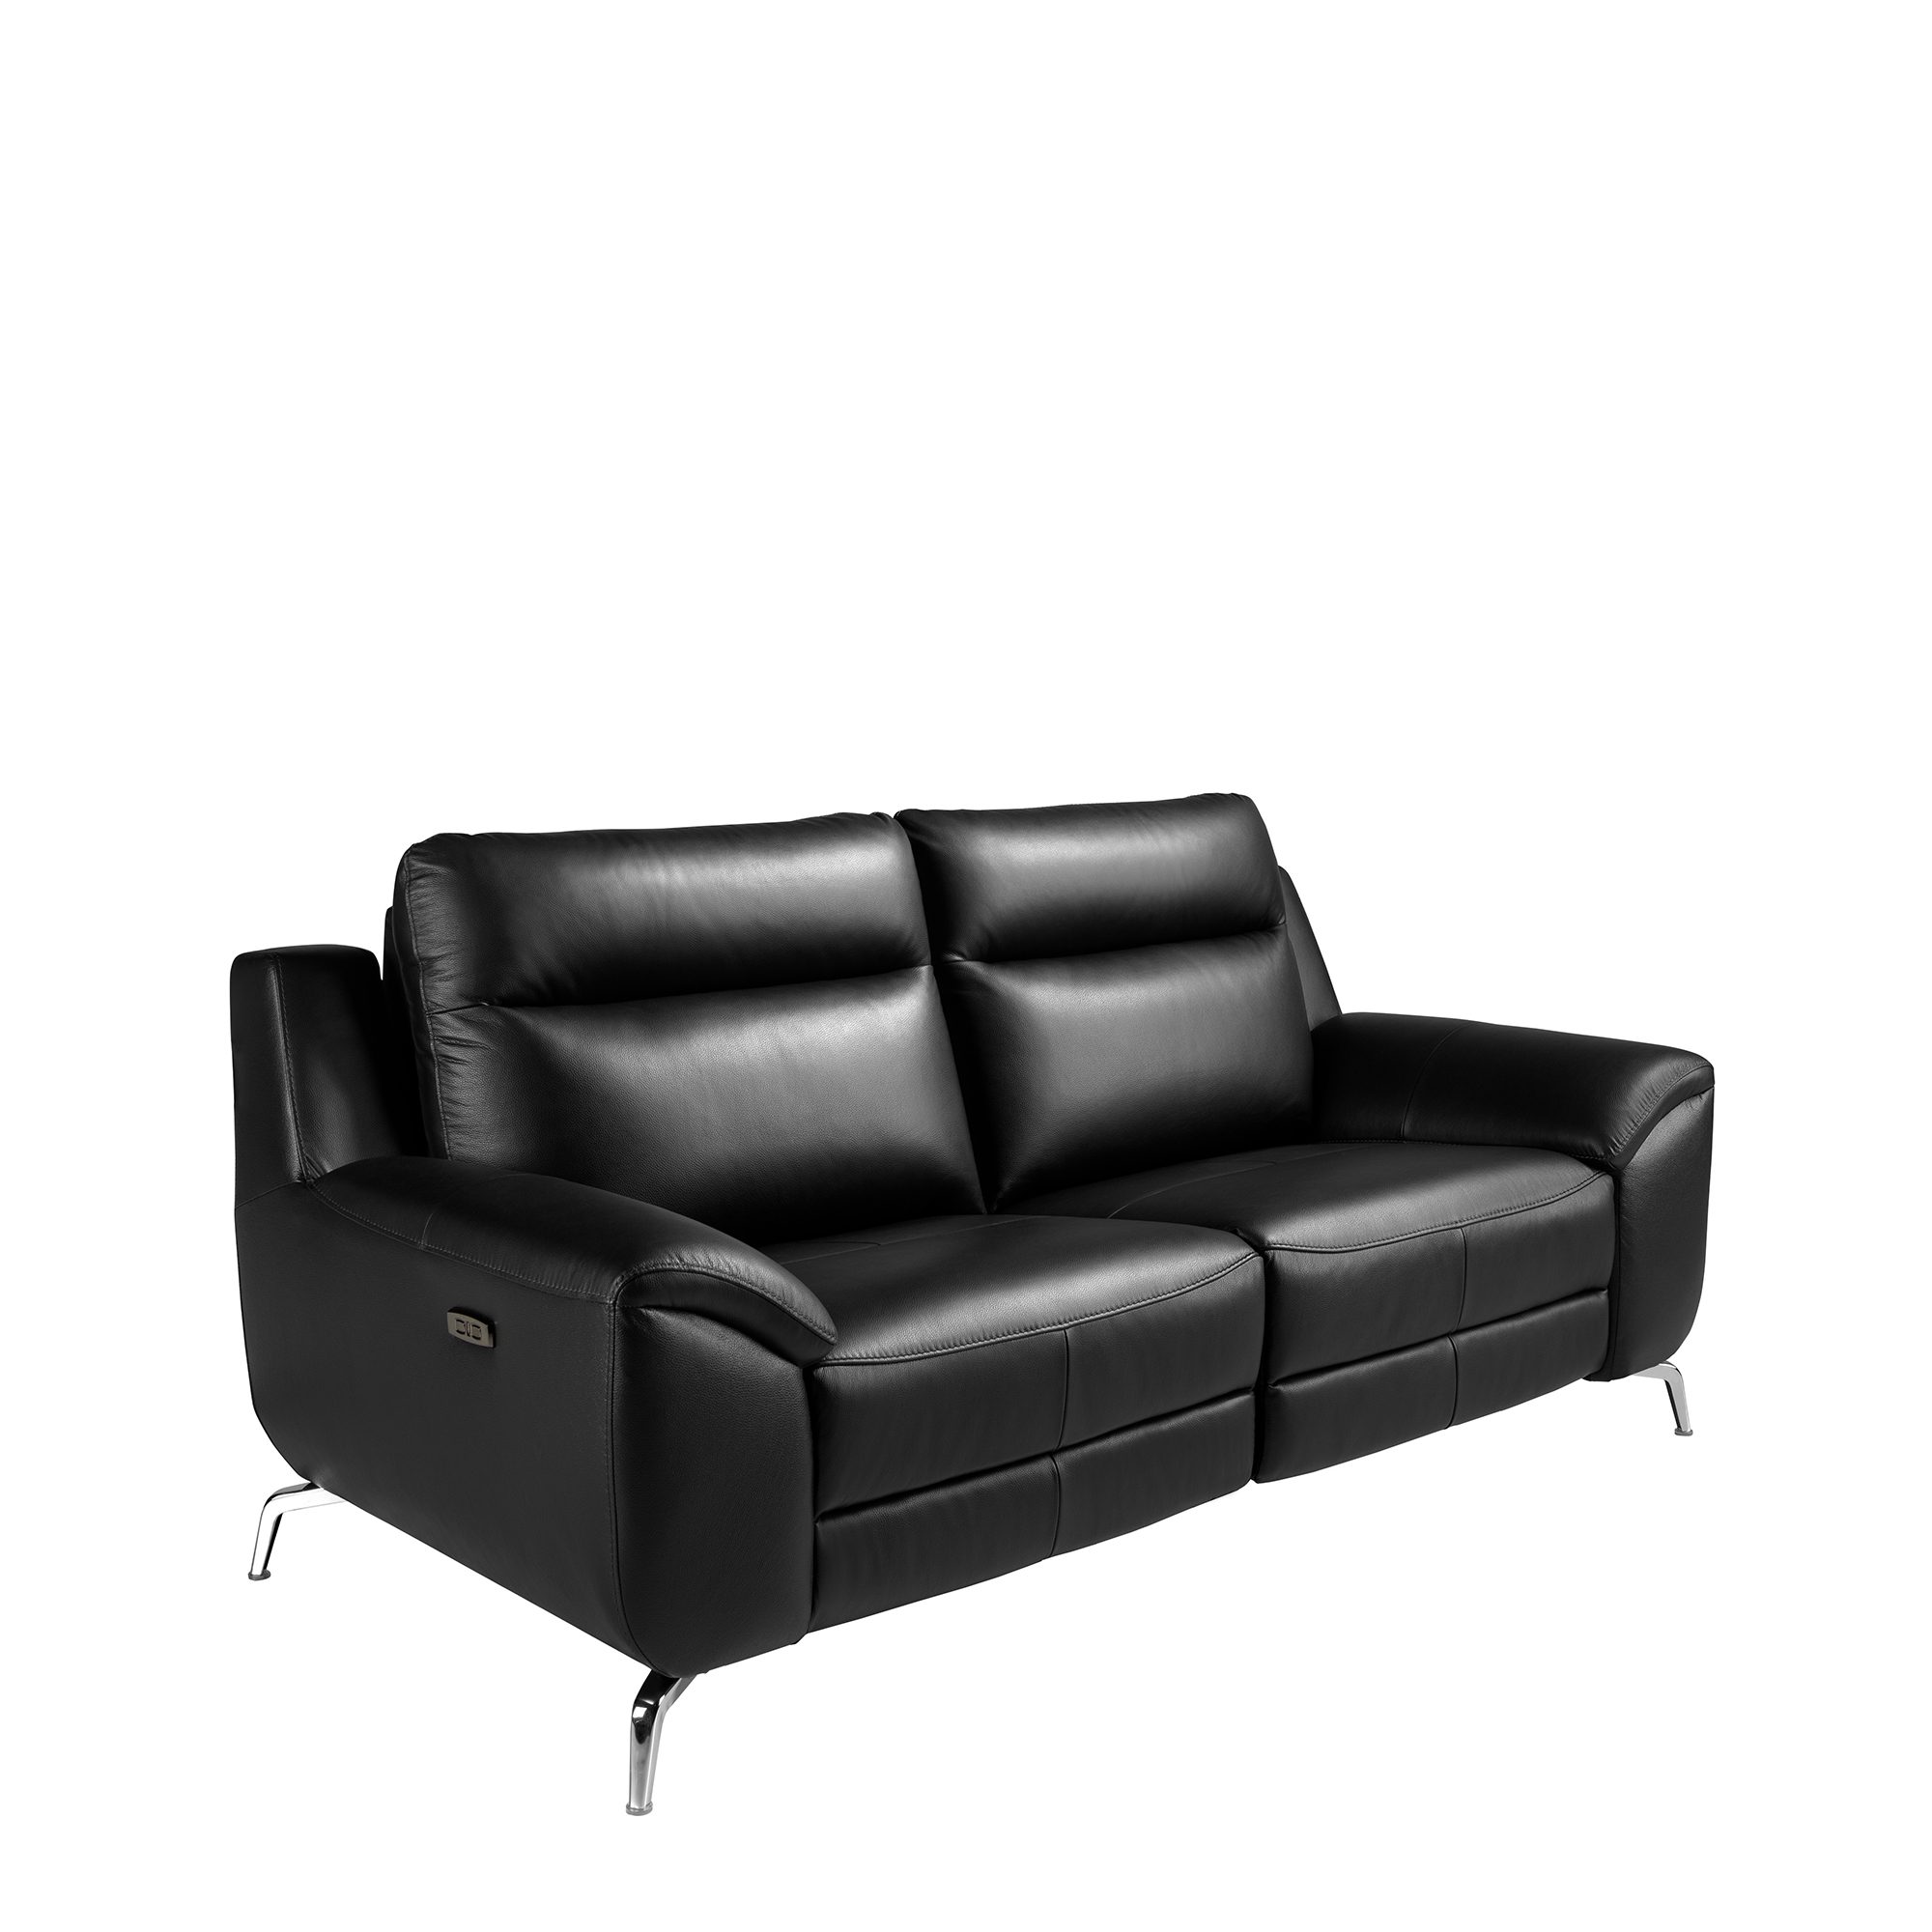 2-Sitzer Relaxsofa aus schwarzem Leder